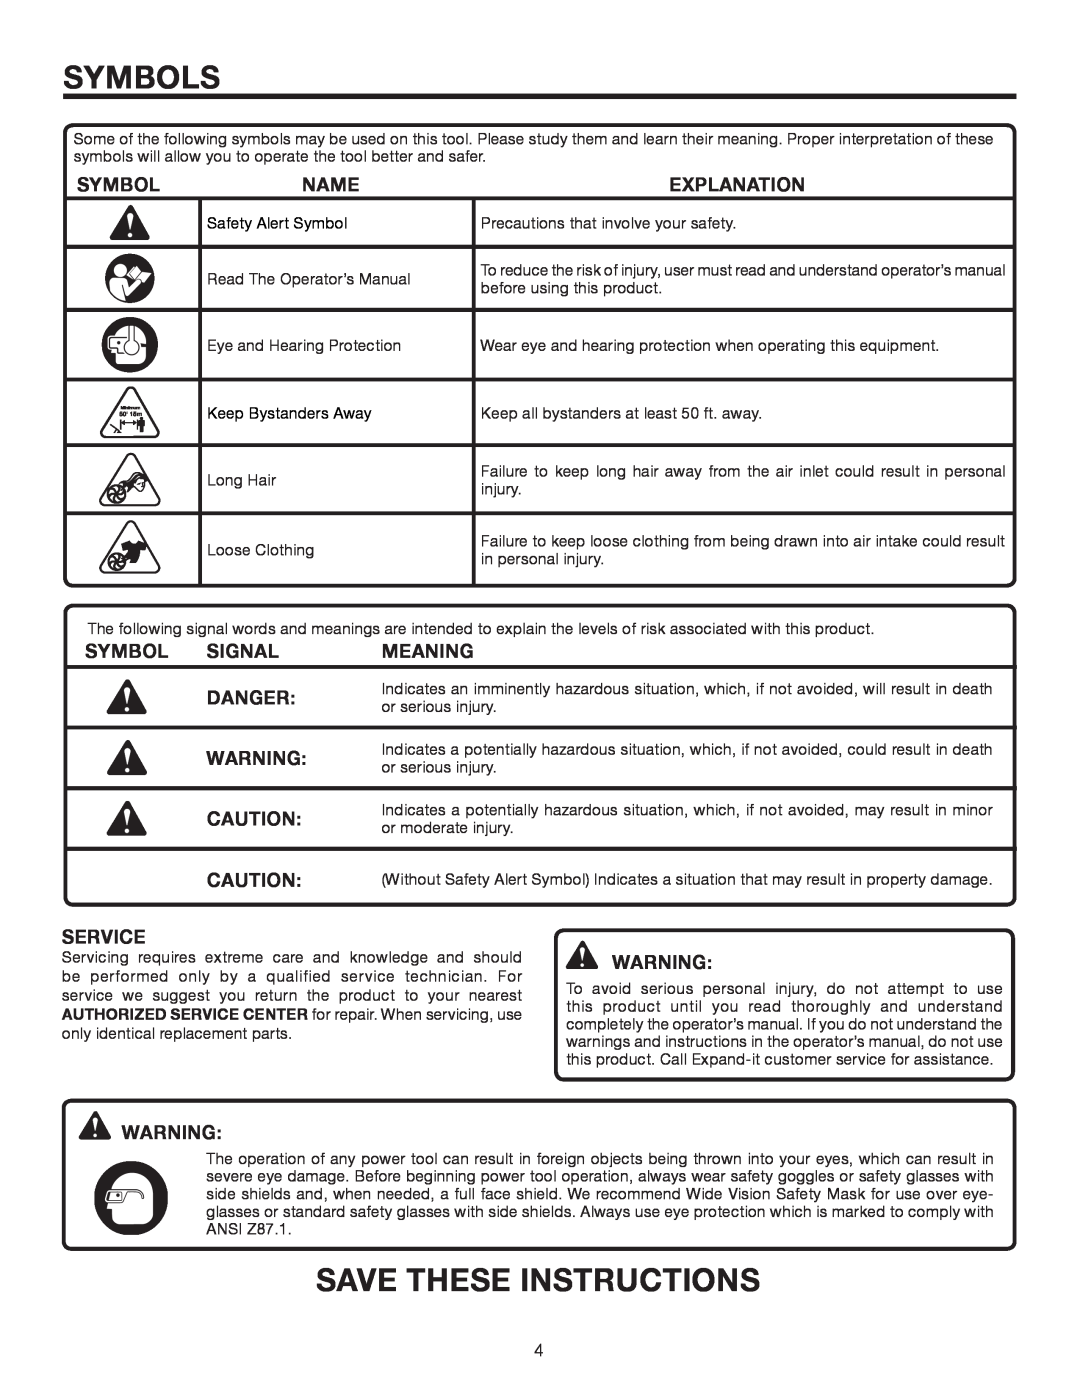 Ryobi UT15519E manual Symbols, Save These Instructions, Name, Explanation, Signal, Meaning, Danger, Service 